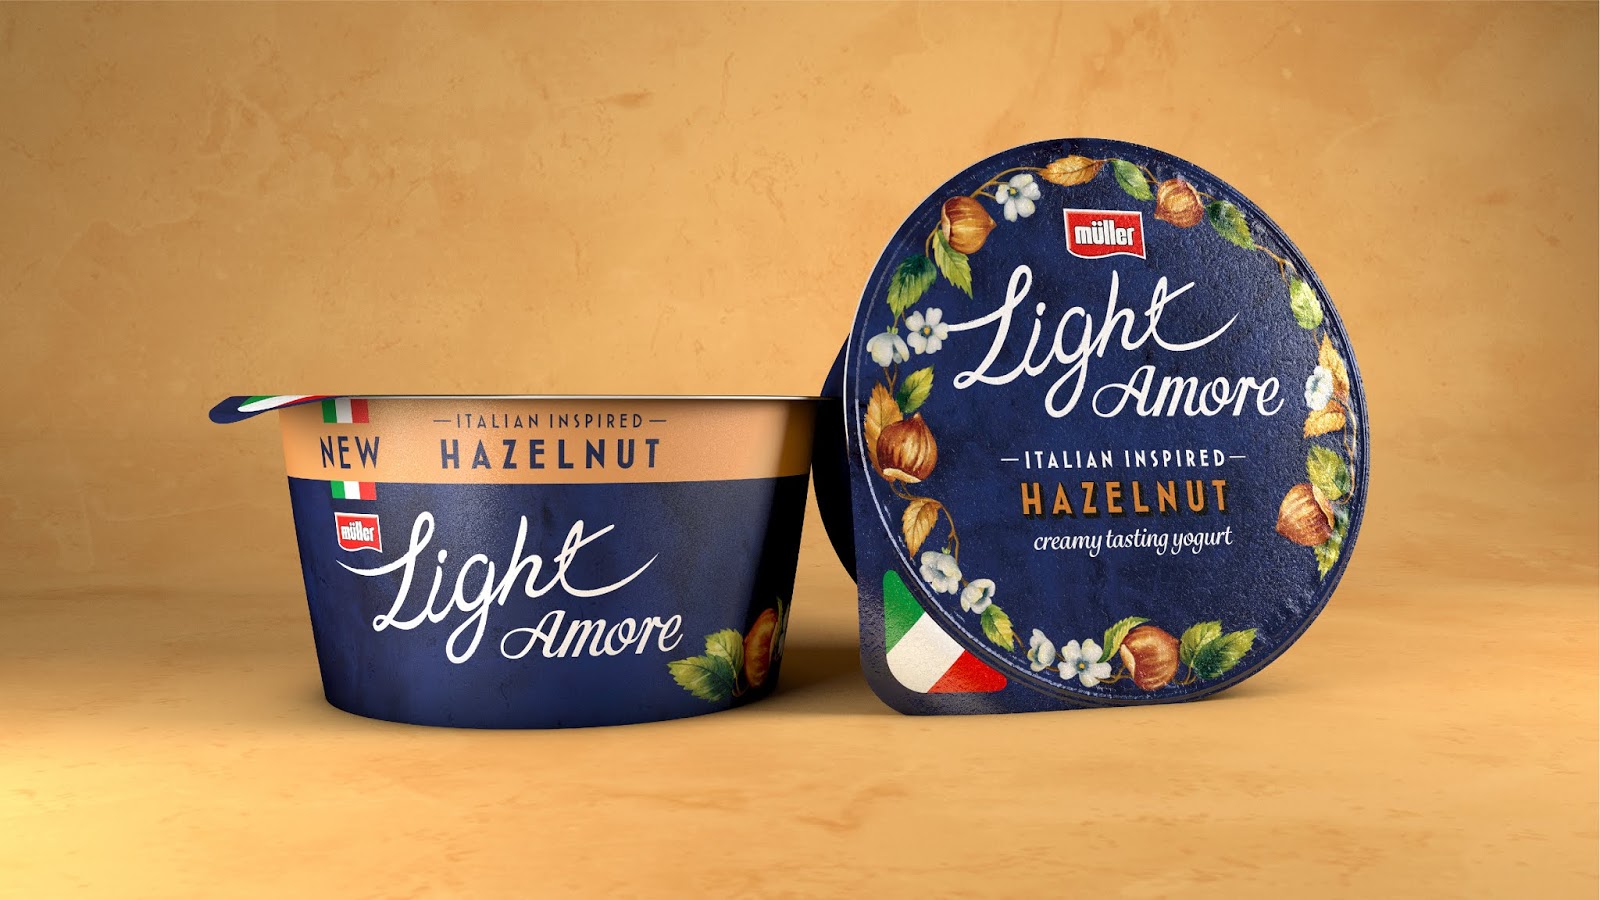 Muller Light Amore意大利风格酸奶包装设计